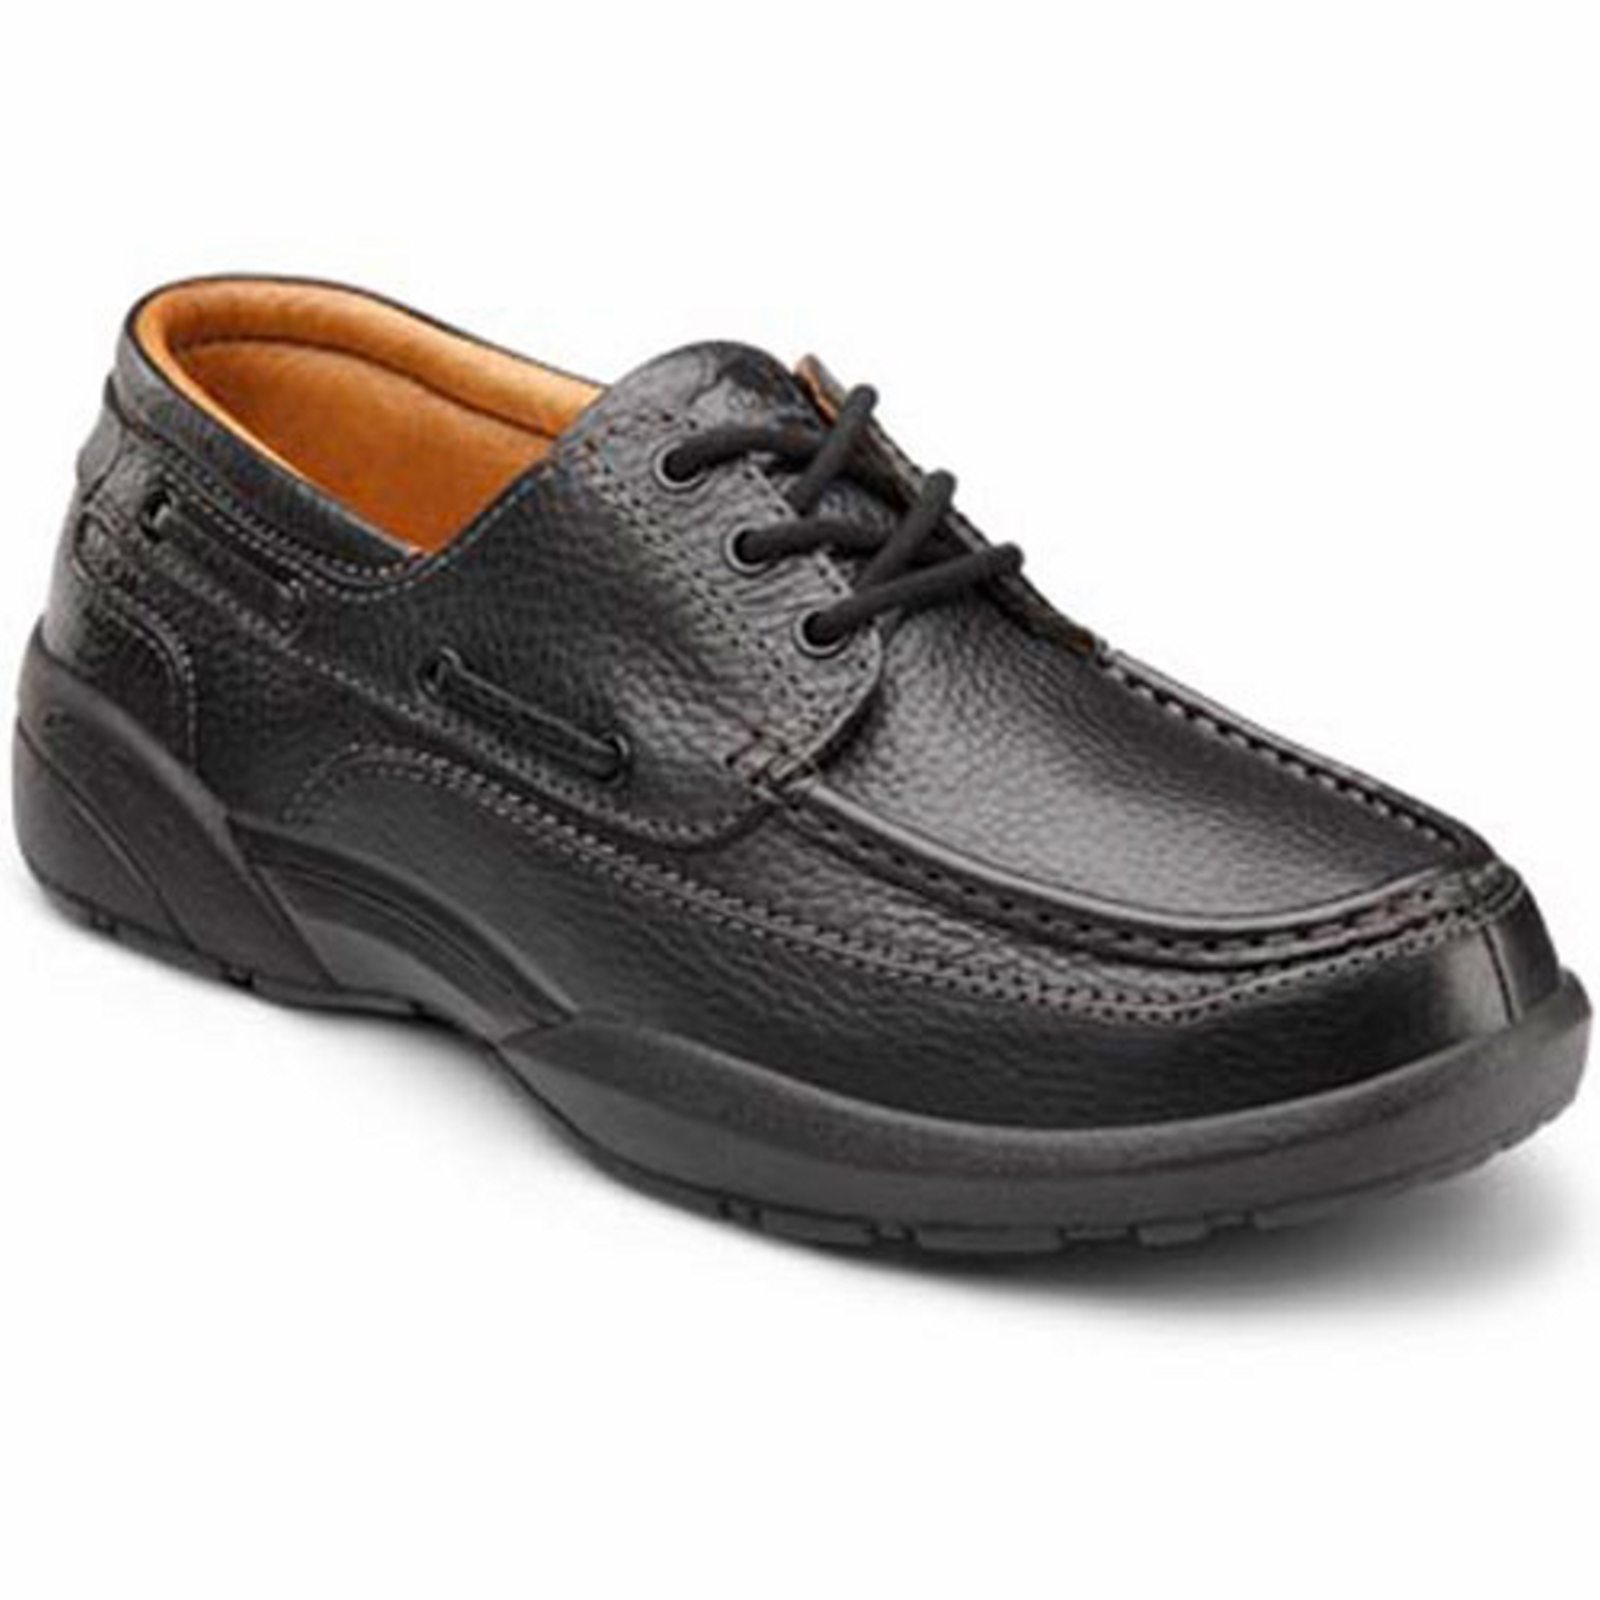 Dr. Comfort Patrick Men's Boat Shoe: 12 Medium (B/D) Black Lace - image 1 of 4